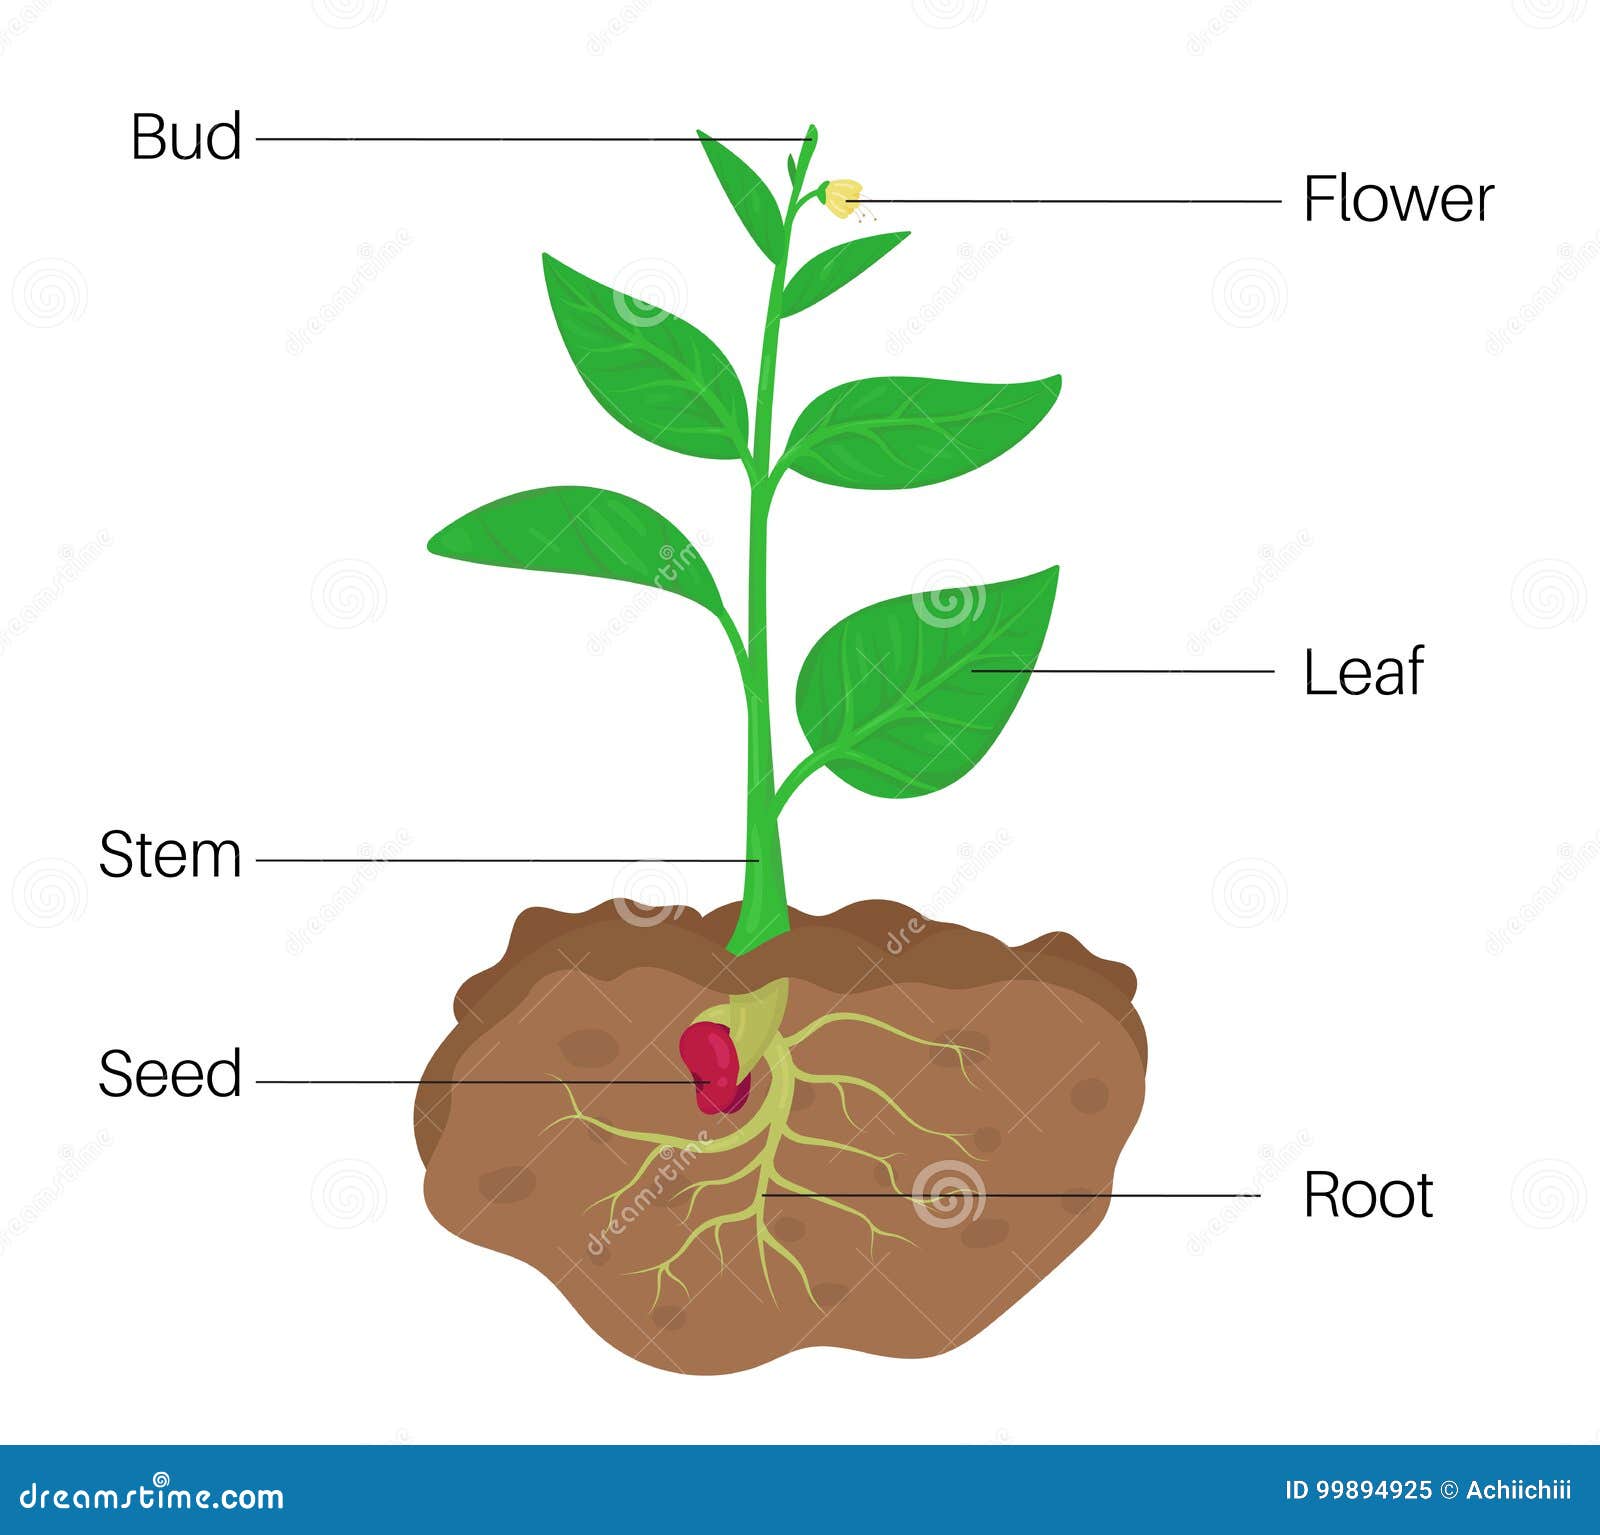 [DIAGRAM] Parts Of Plant Diagram For Kids - MYDIAGRAM.ONLINE